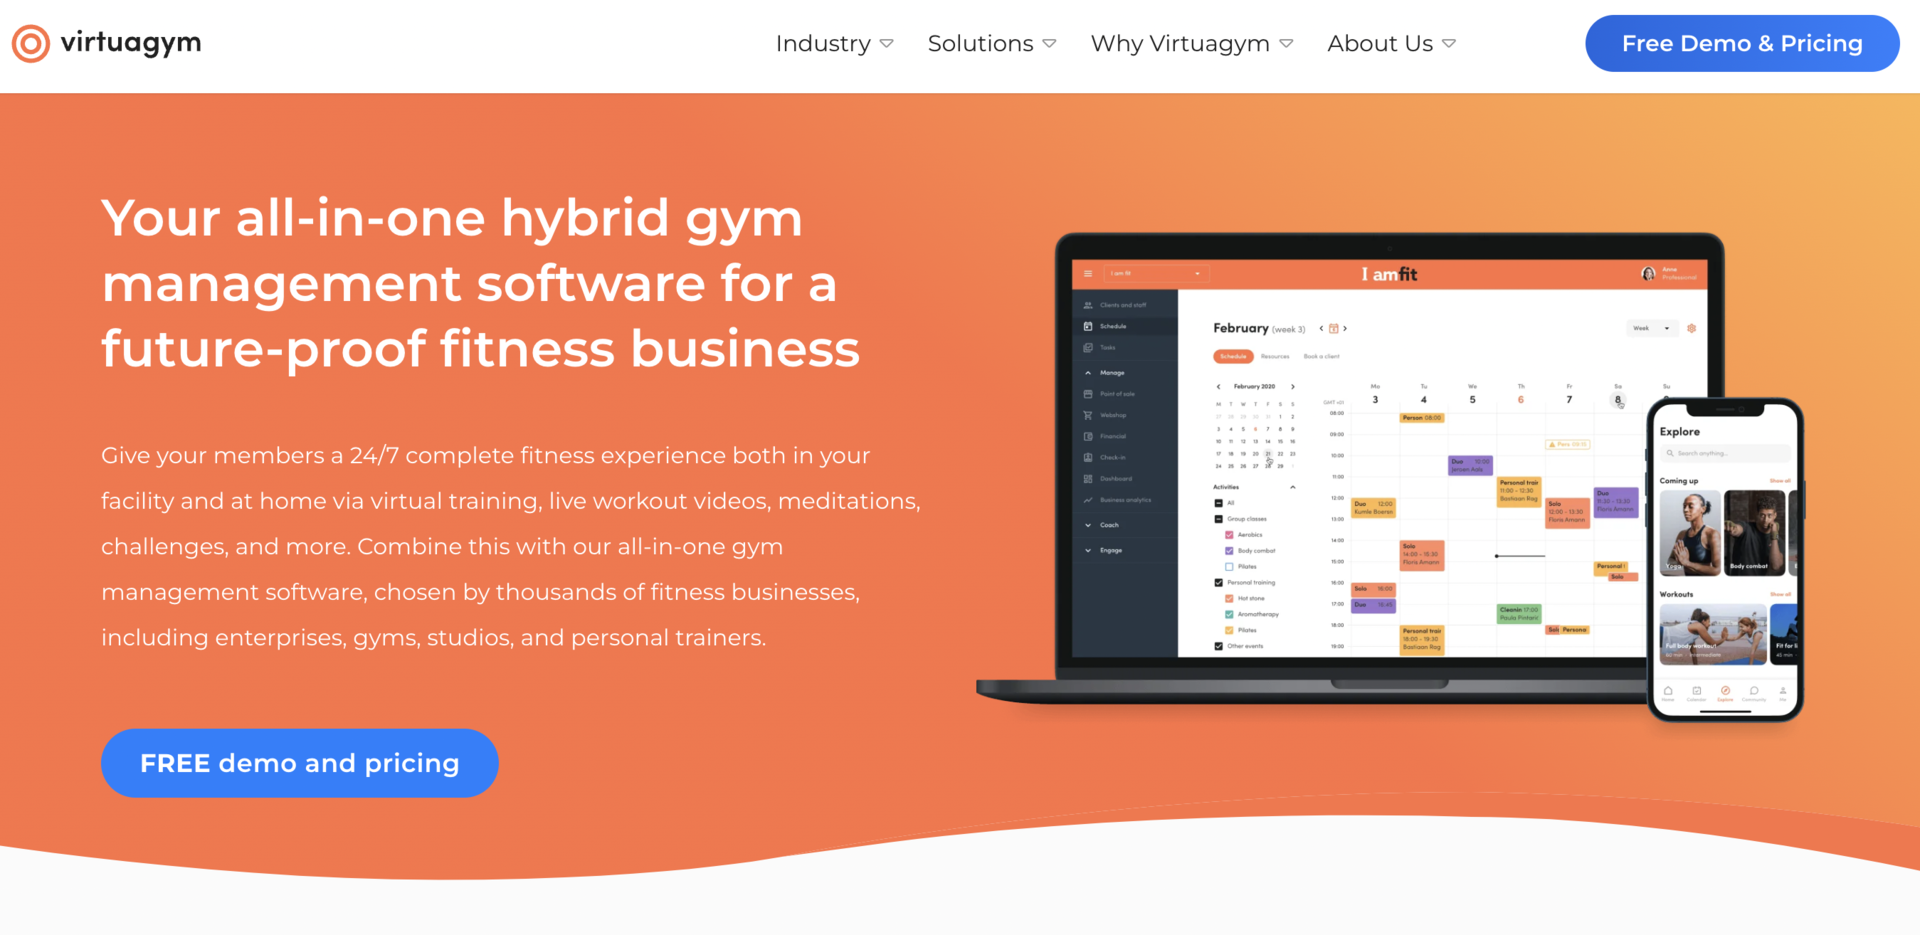 19 Best Free Gym Management Software Options | OriGym